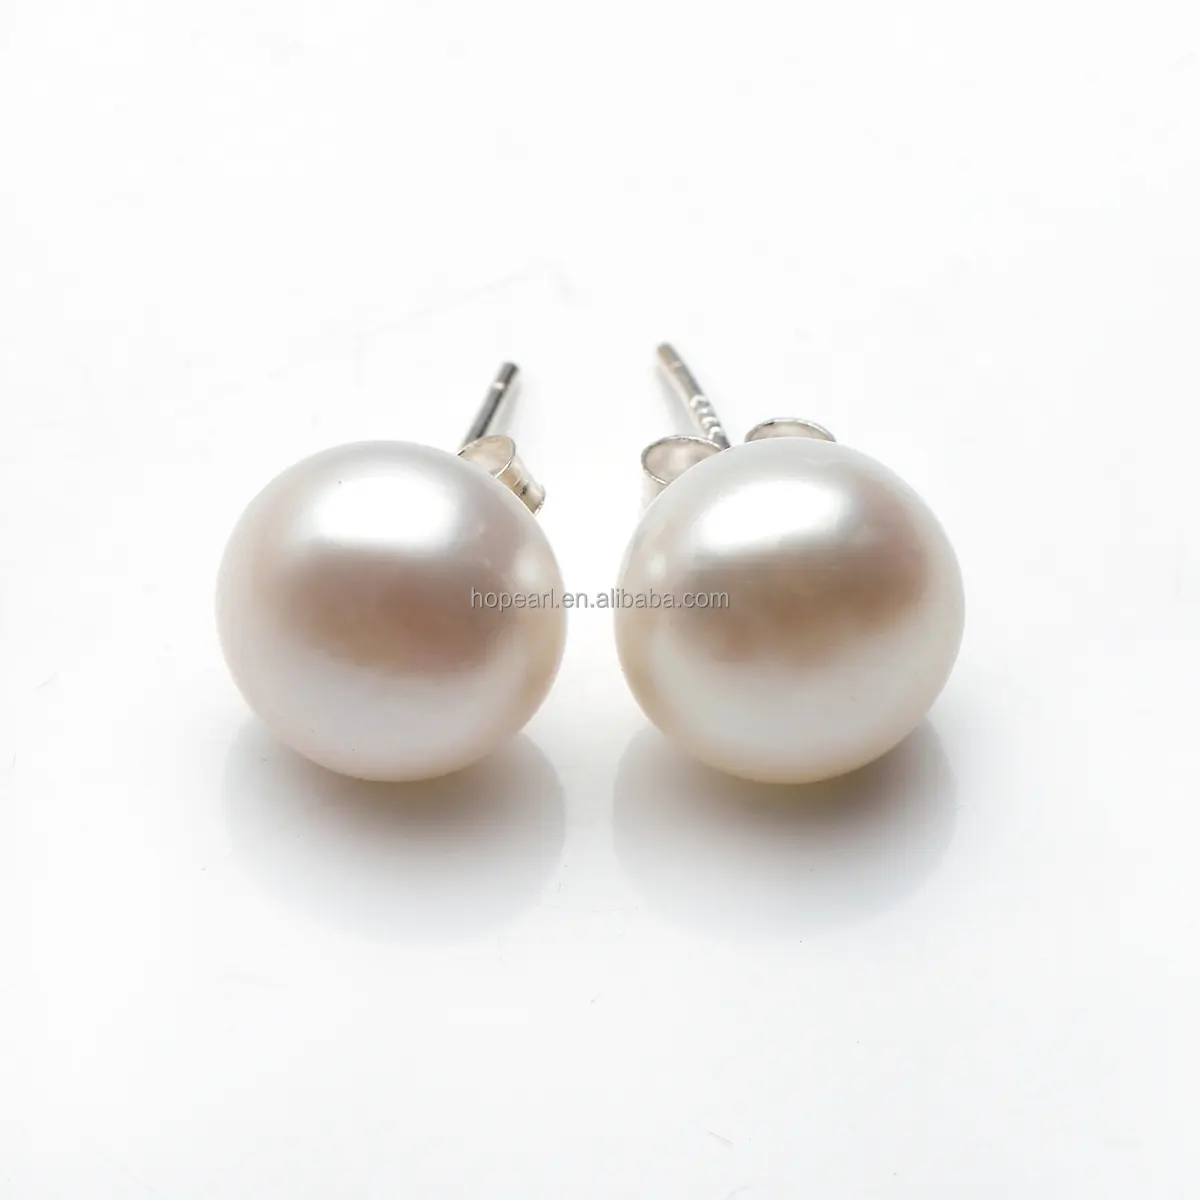 FPE374 Big Size 12-13mm Button Freshwater White Pearl Silver 925 Studs Earrings Women Pearl Jewelry